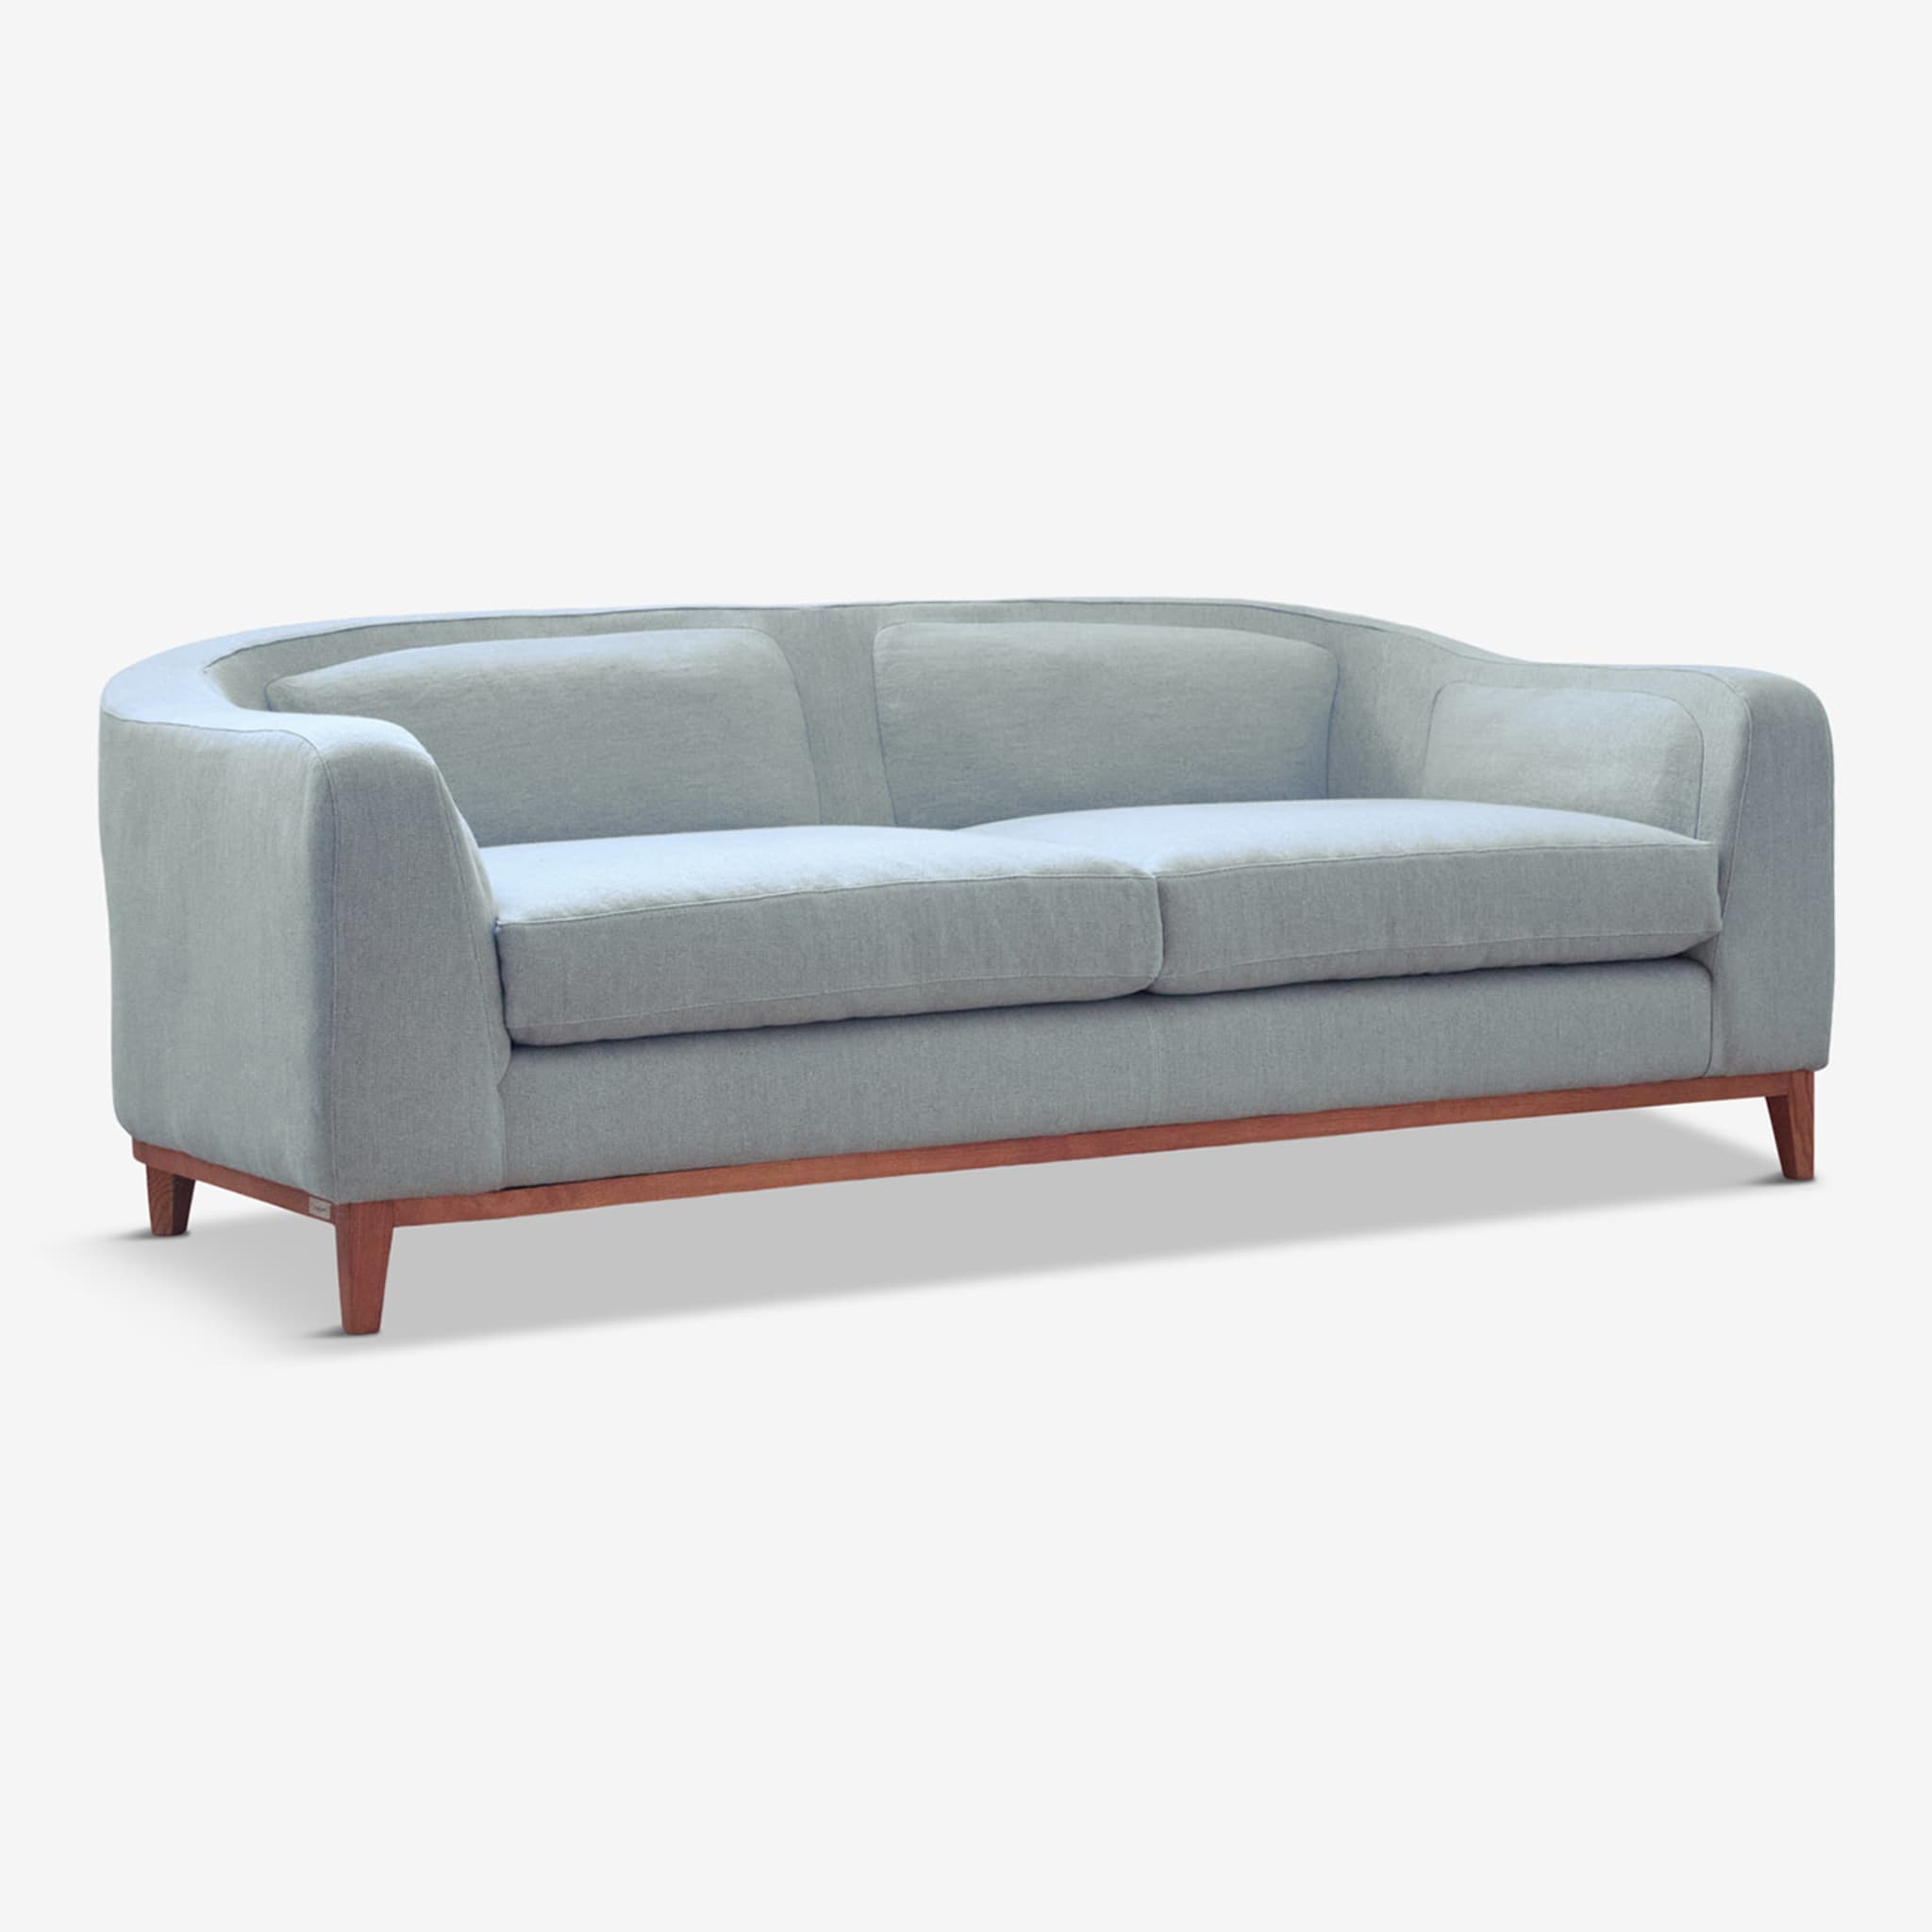 Zeno 2 Seater Sofa By Brian Sironi - Alternative view 1